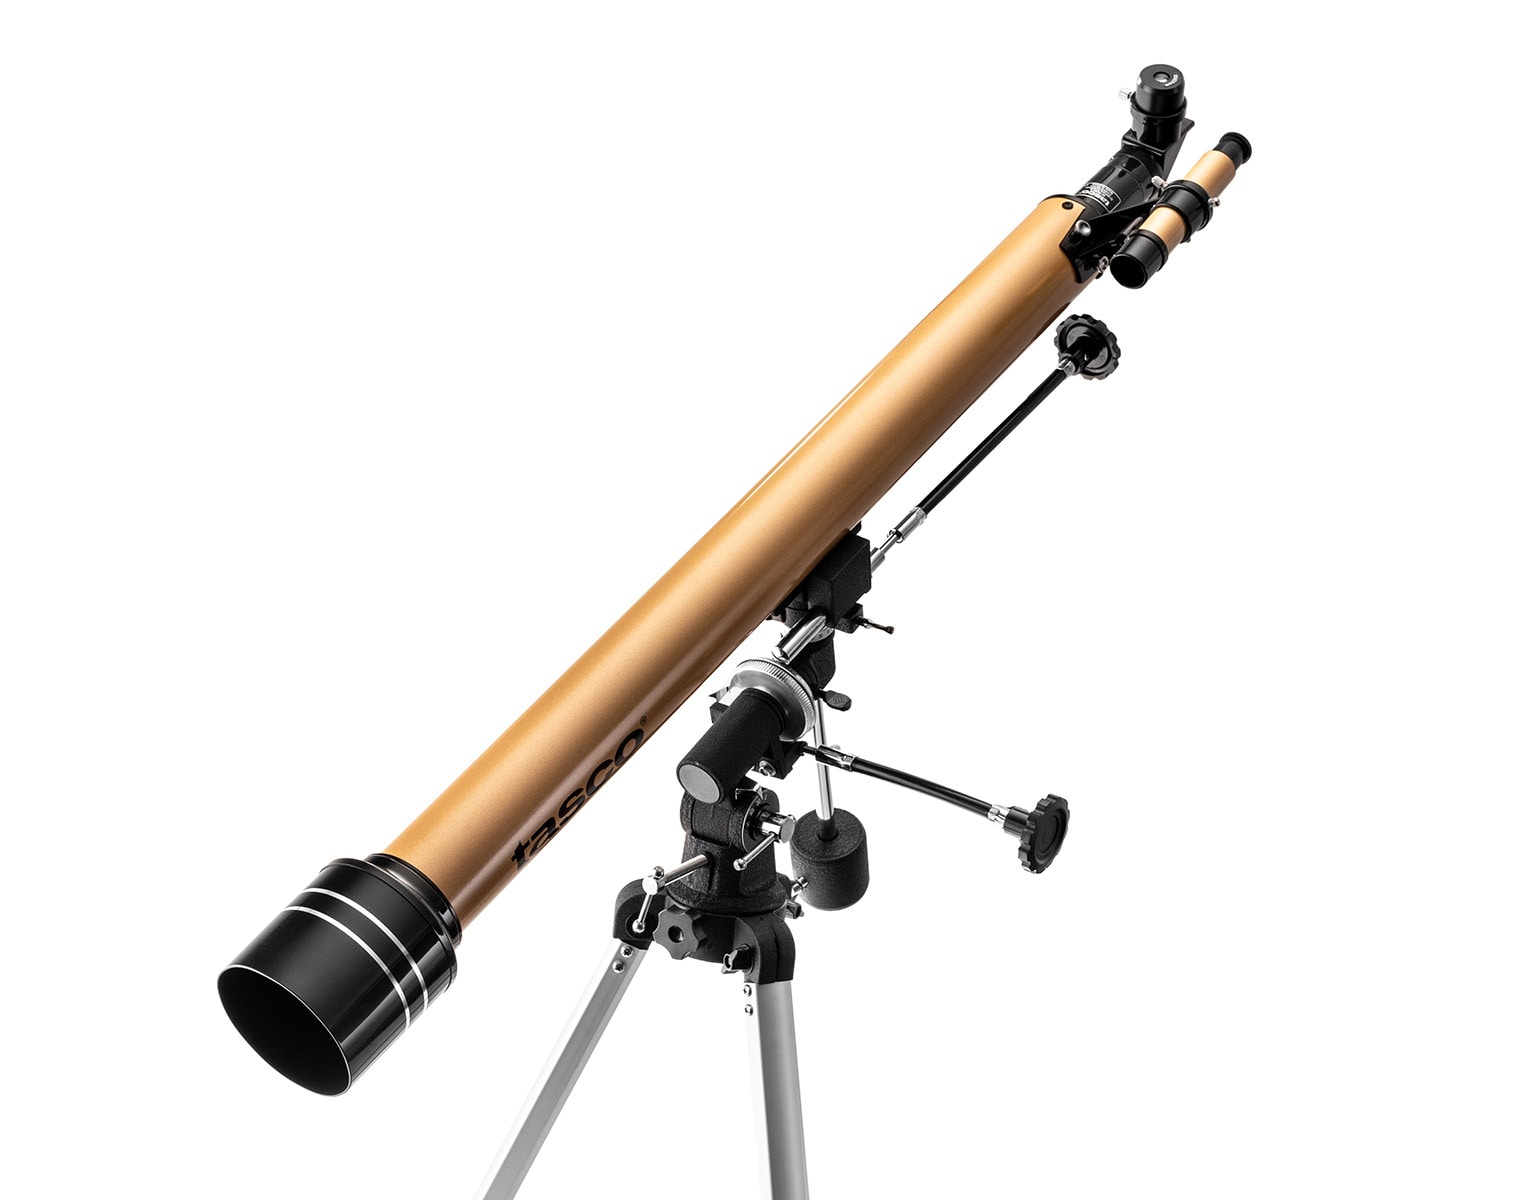 Телескоп Tasco Luminova 60x900 мм 675x